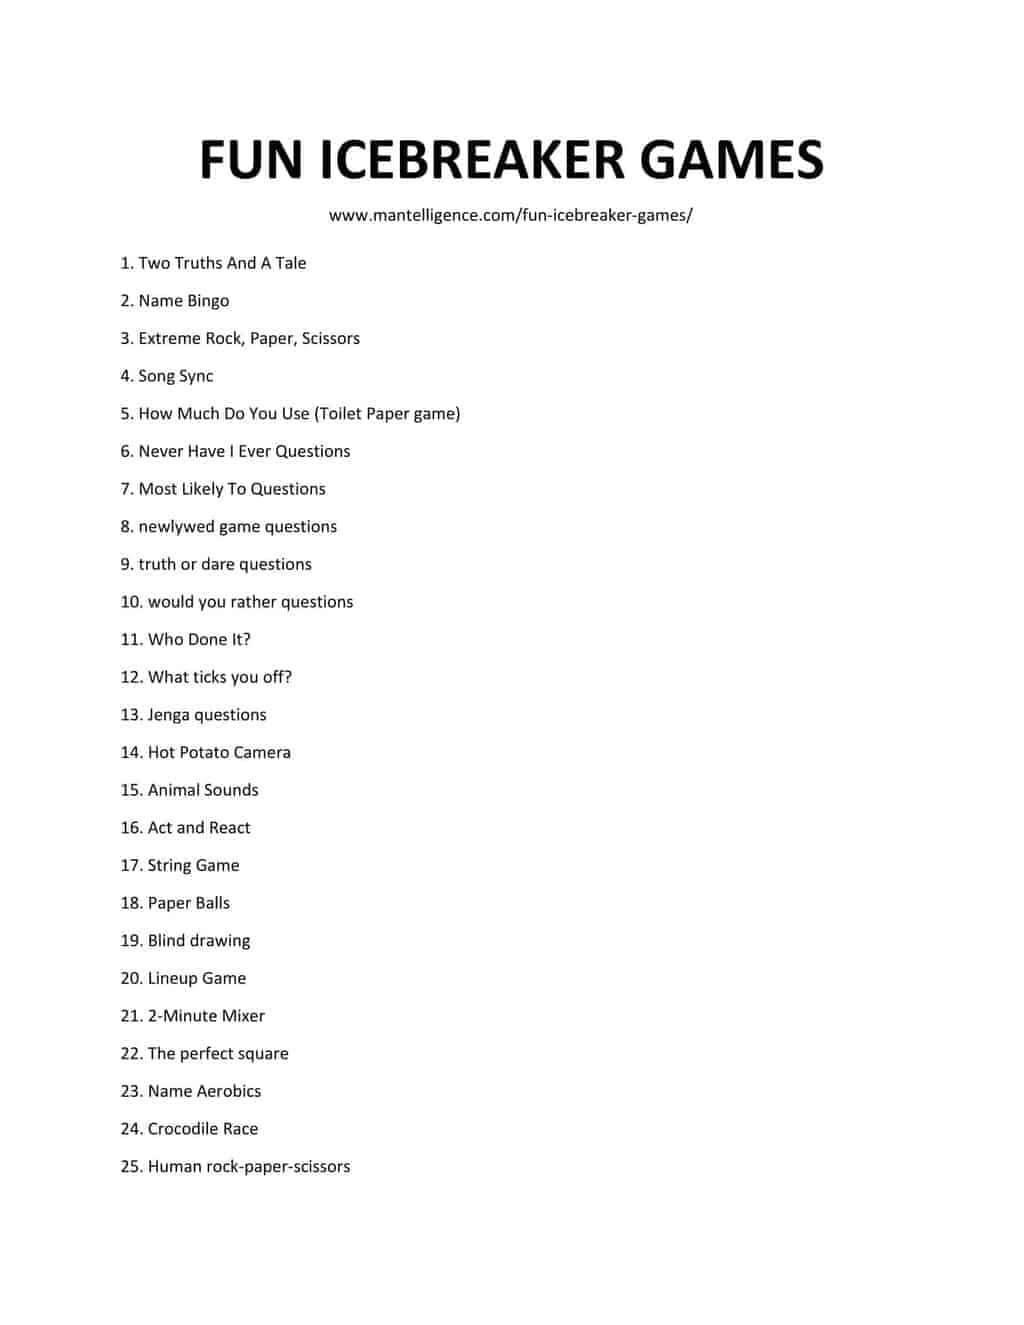 List of FUN ICEBREAKER GAME